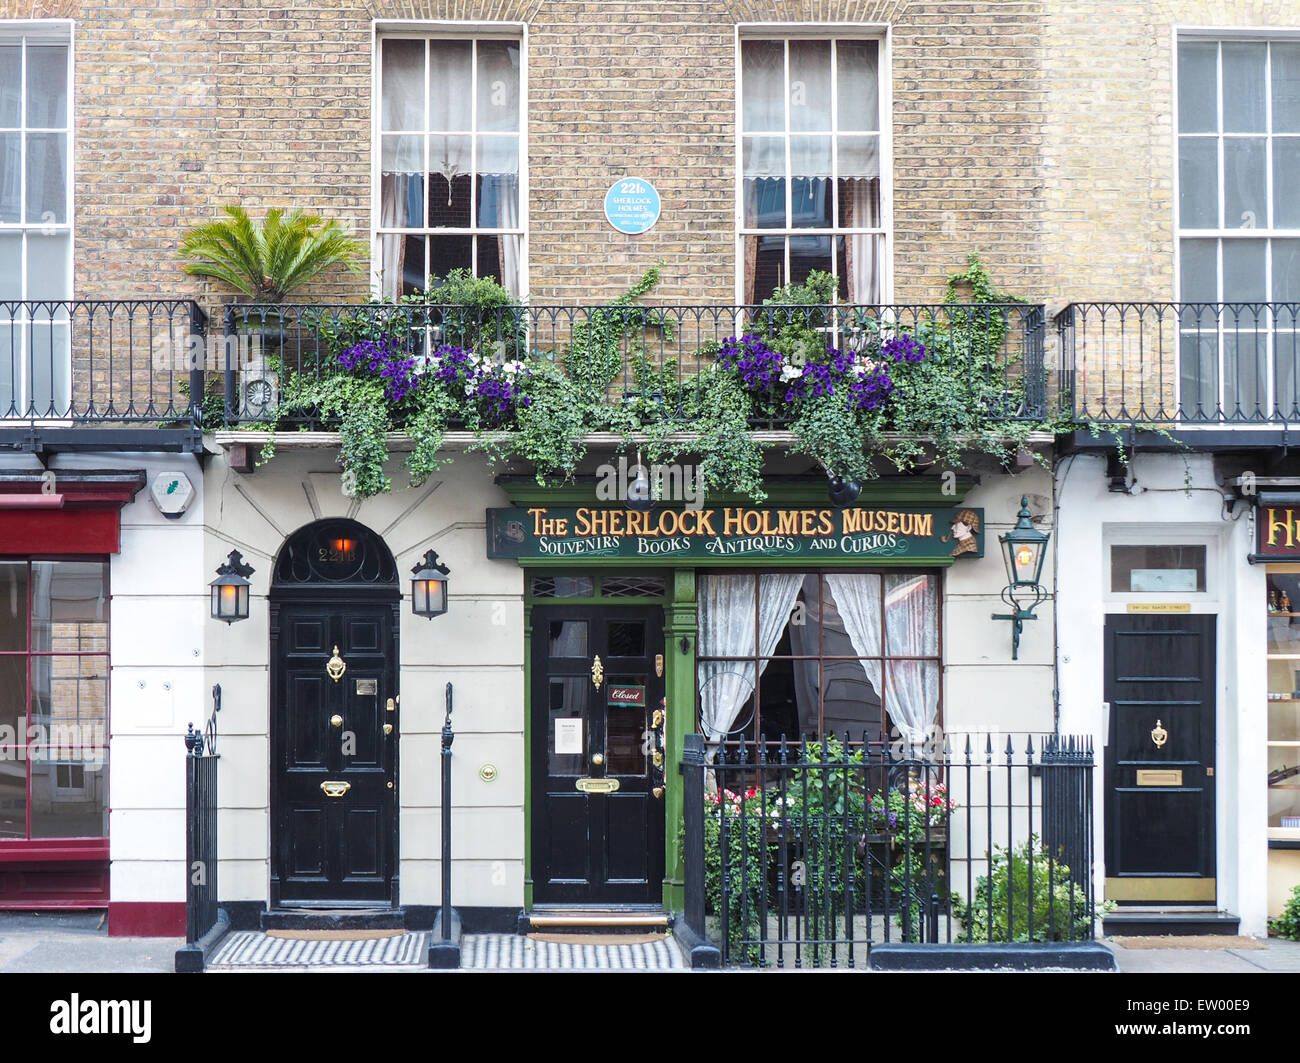 London, UK - 10. Juni 2015 - Fassade des Sherlock Holmes-Haus und Museum in der Baker Street 221 b. Stockfoto